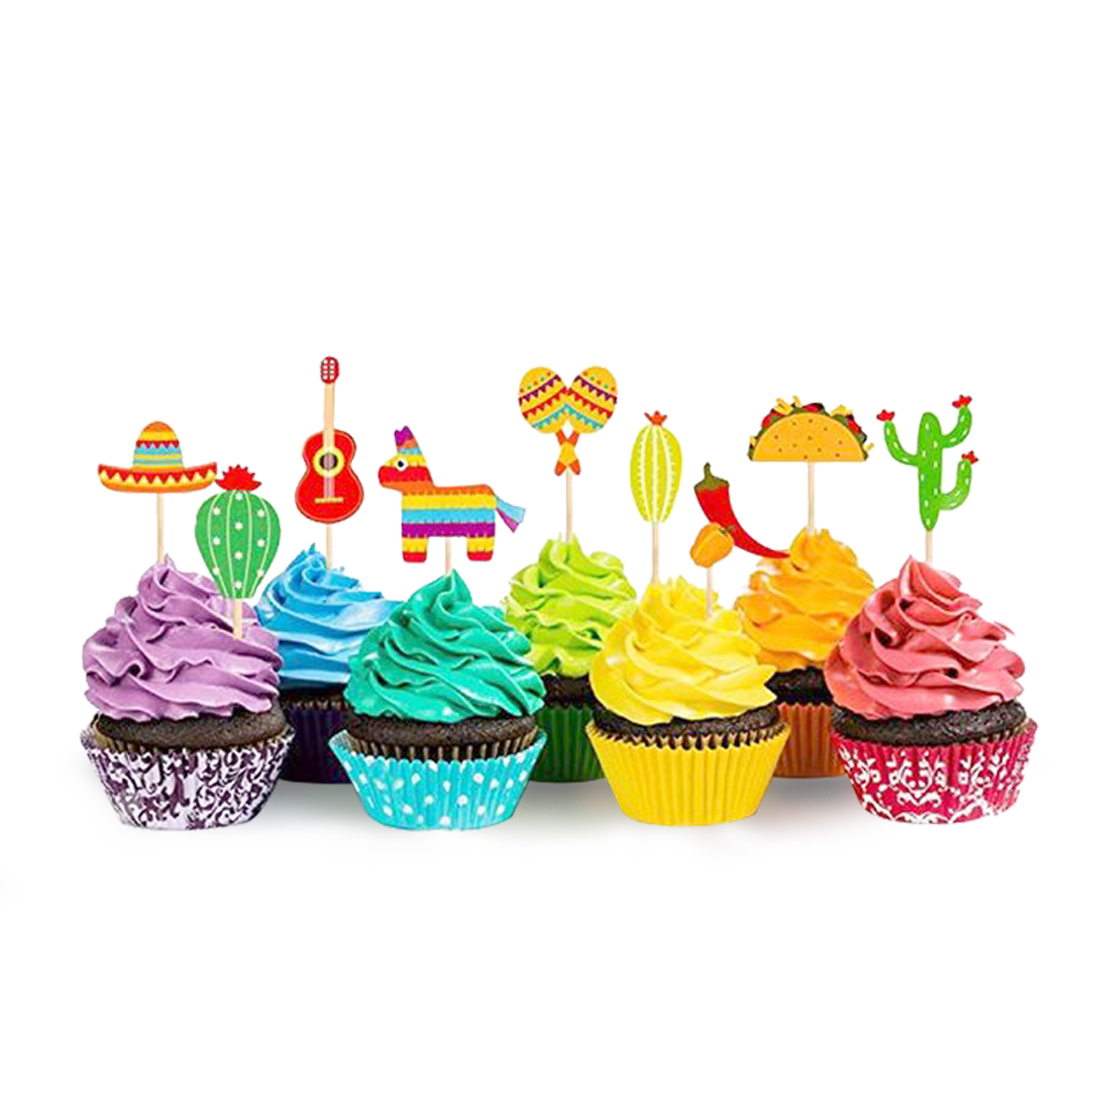 Cupcakes mexicanos, con detalles en colores vivos, docena